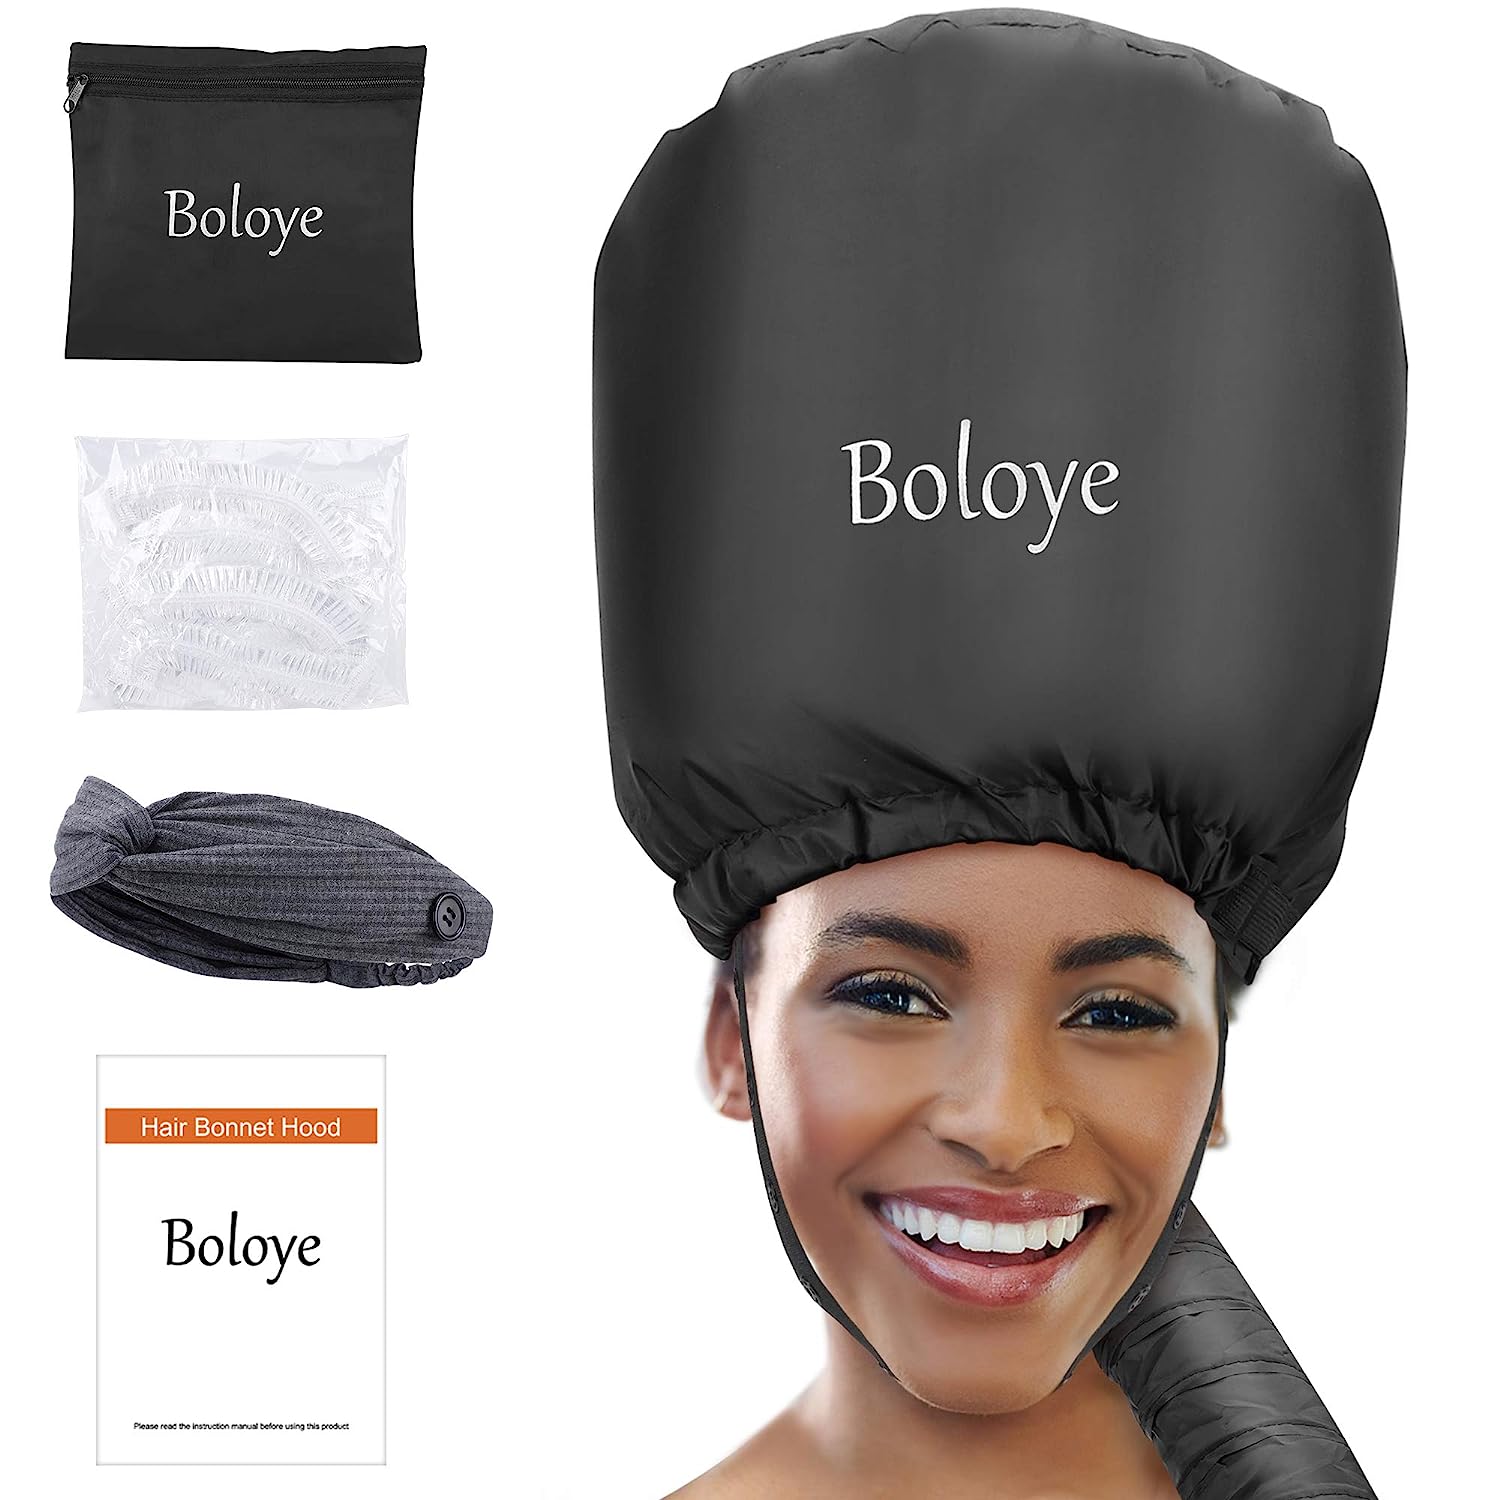 Bonnet Hair Dryer - Boloye Soft Bonnet Hood Hair Dryer [...]